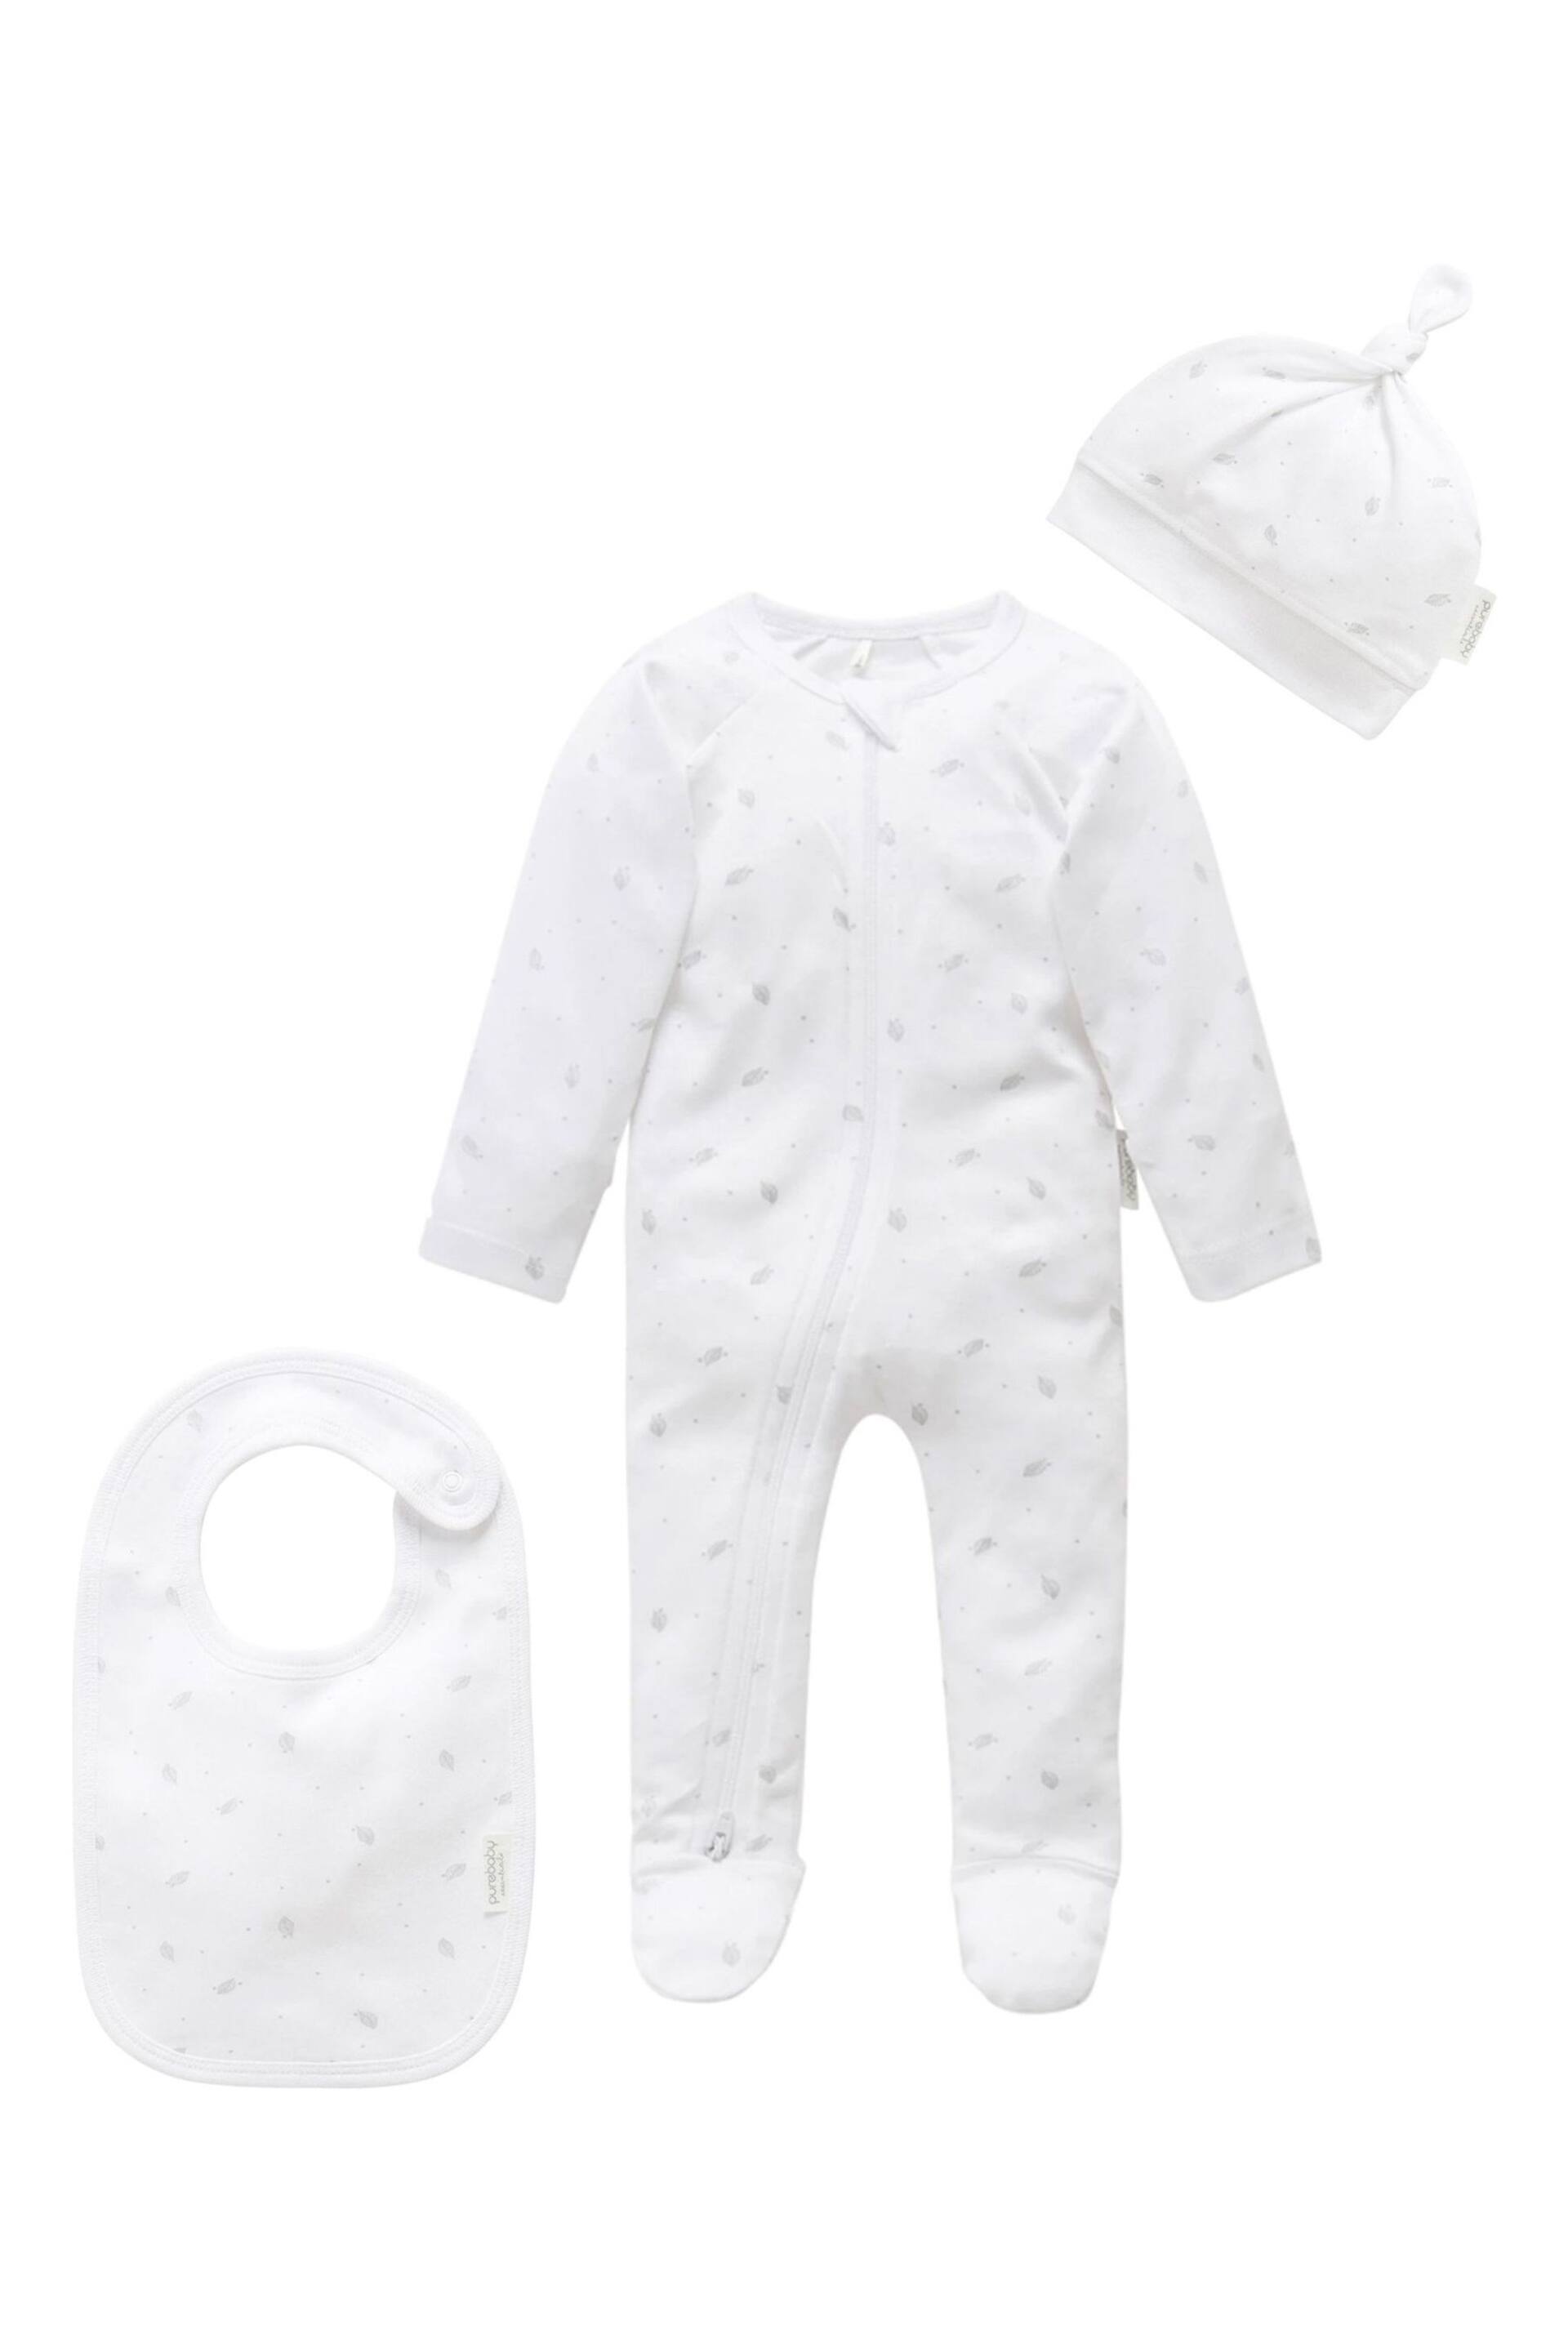 Purebaby 3 Piece Baby Hat, Bib & Sleepsuit Set - Image 2 of 2